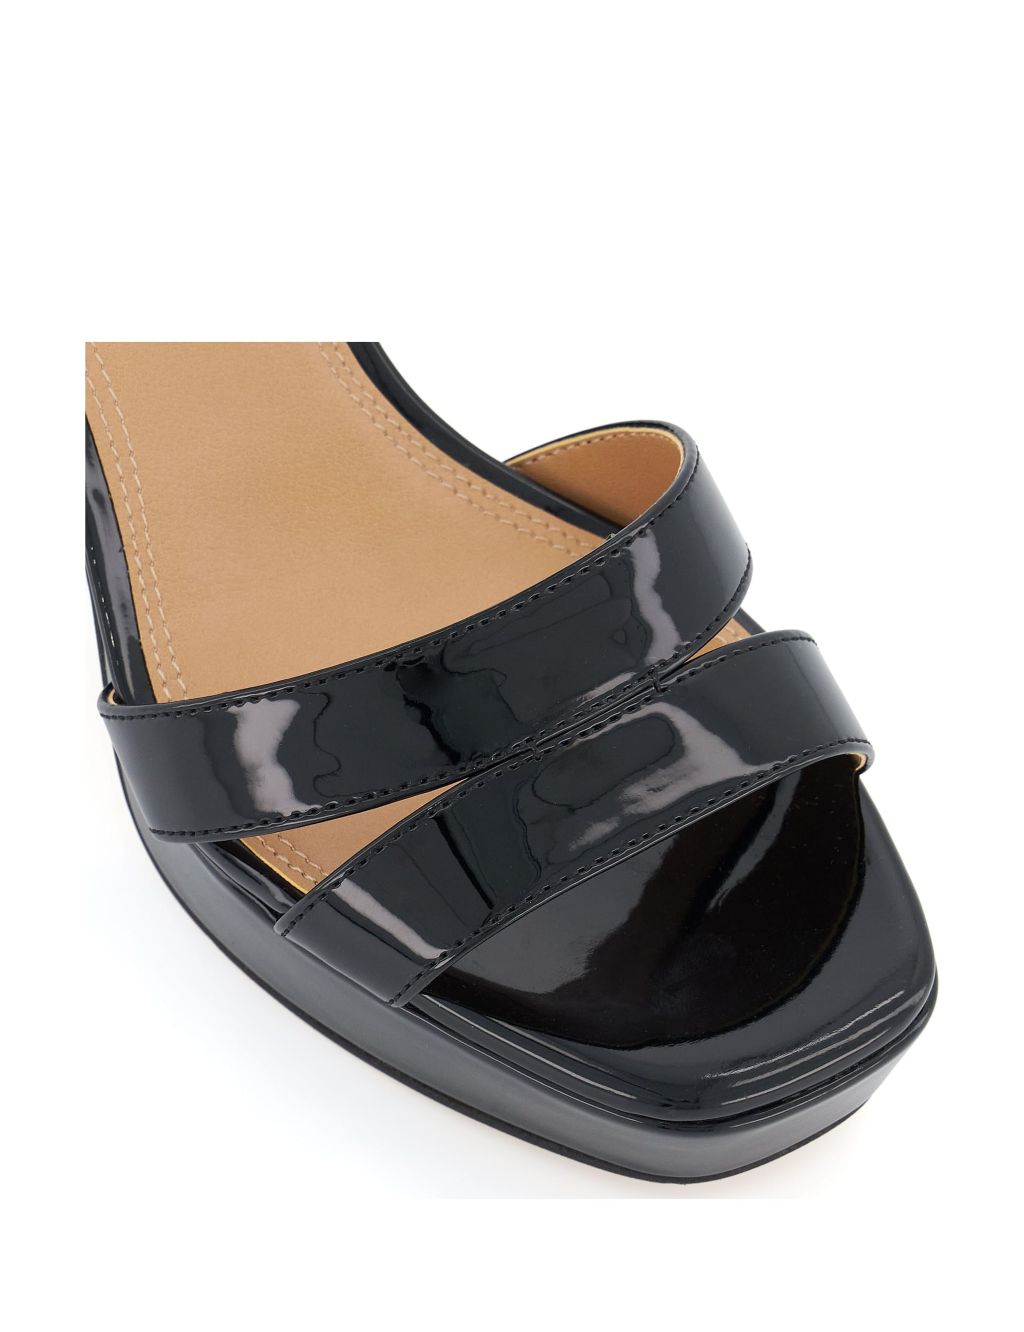 Patent Buckle Ankle Strap Platform Sandals image 5